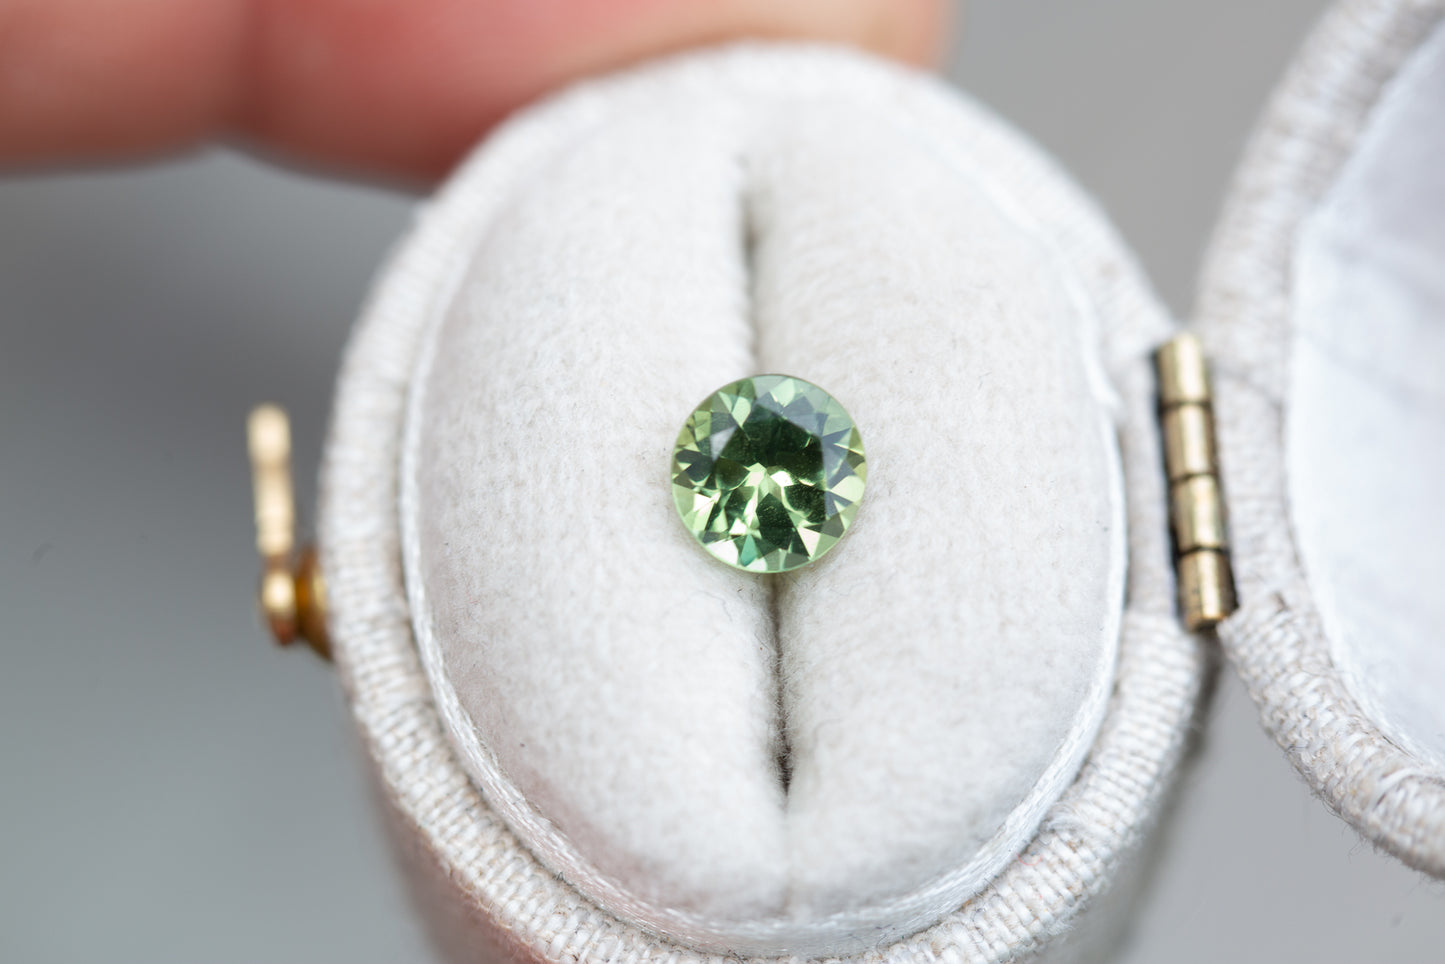 1.09ct round green sapphire